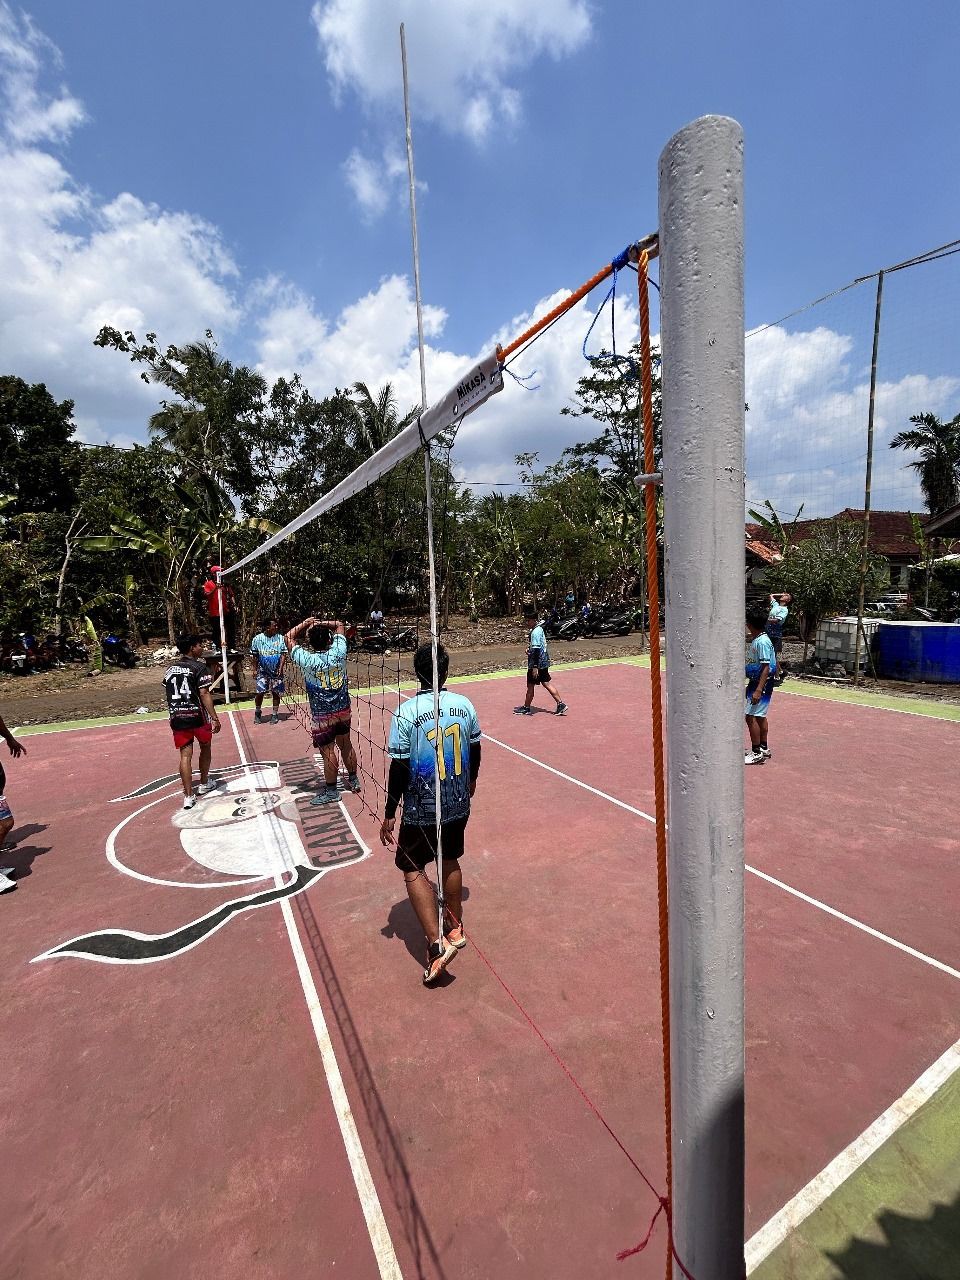 Dukung Olahraga, Millennial Bandung Bangun Lapangan Voli 